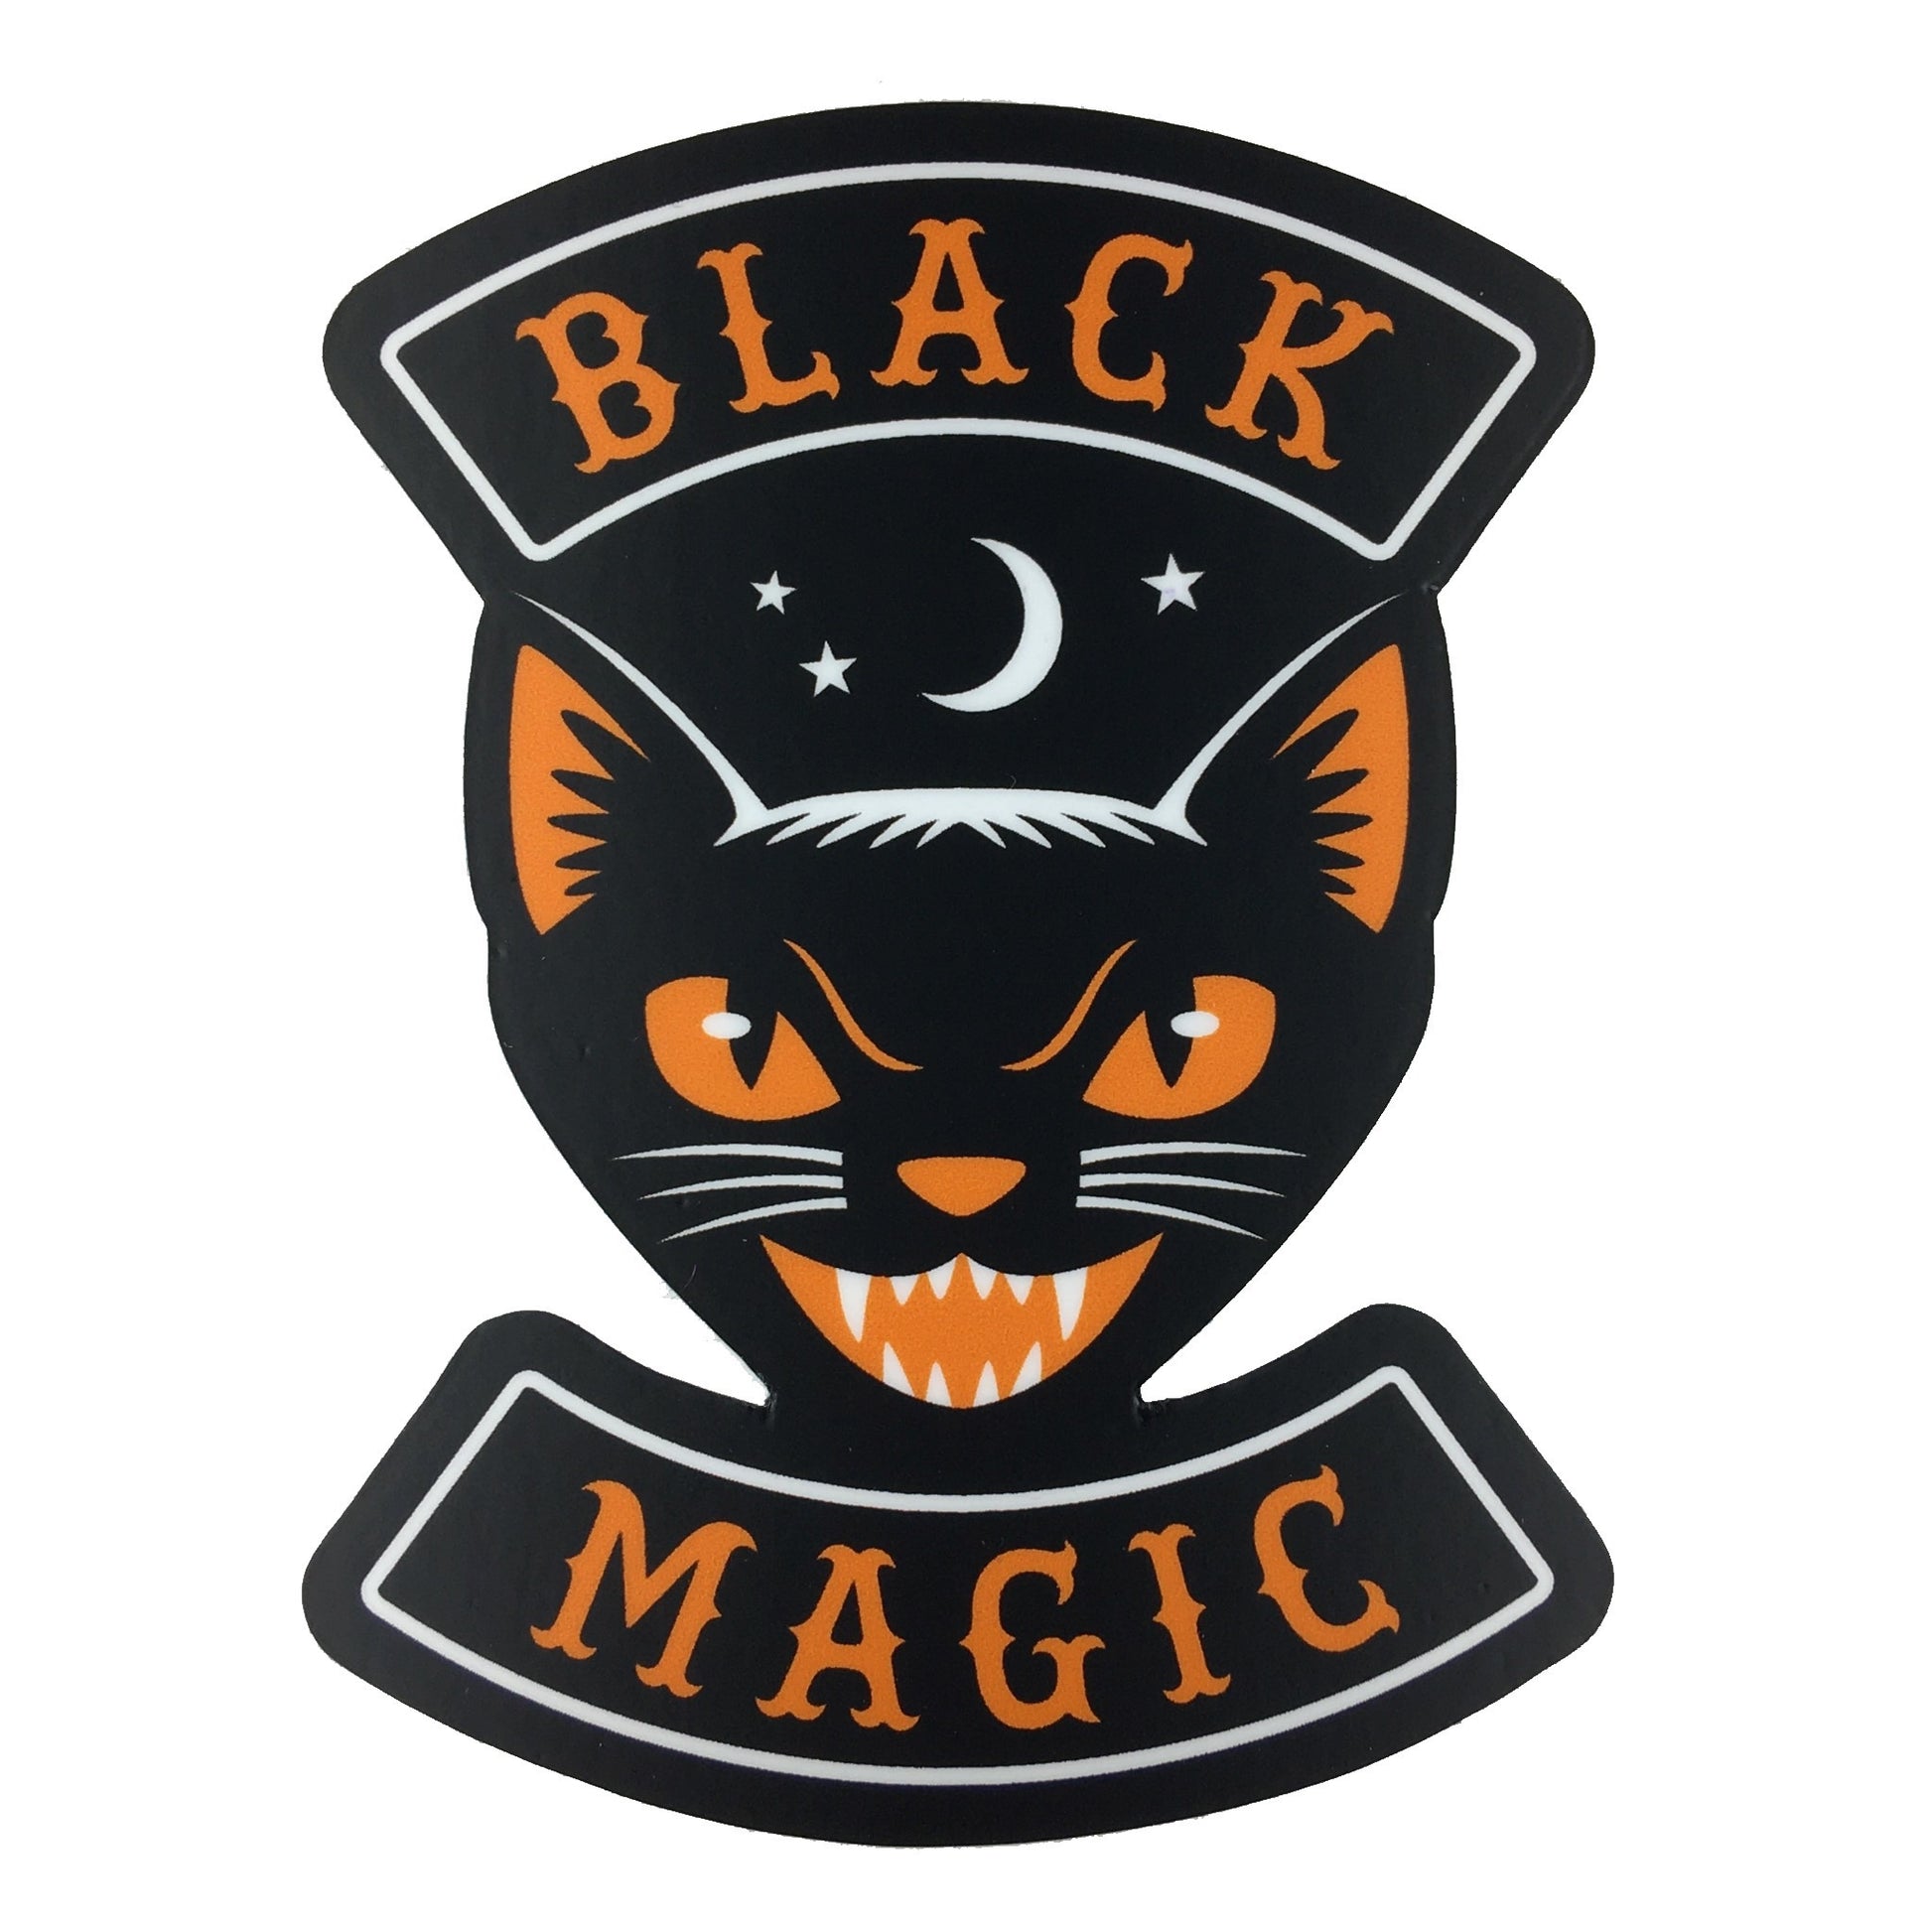 Black Magic Halloween motorcycle club vintage/retro sticker by Monsterologist